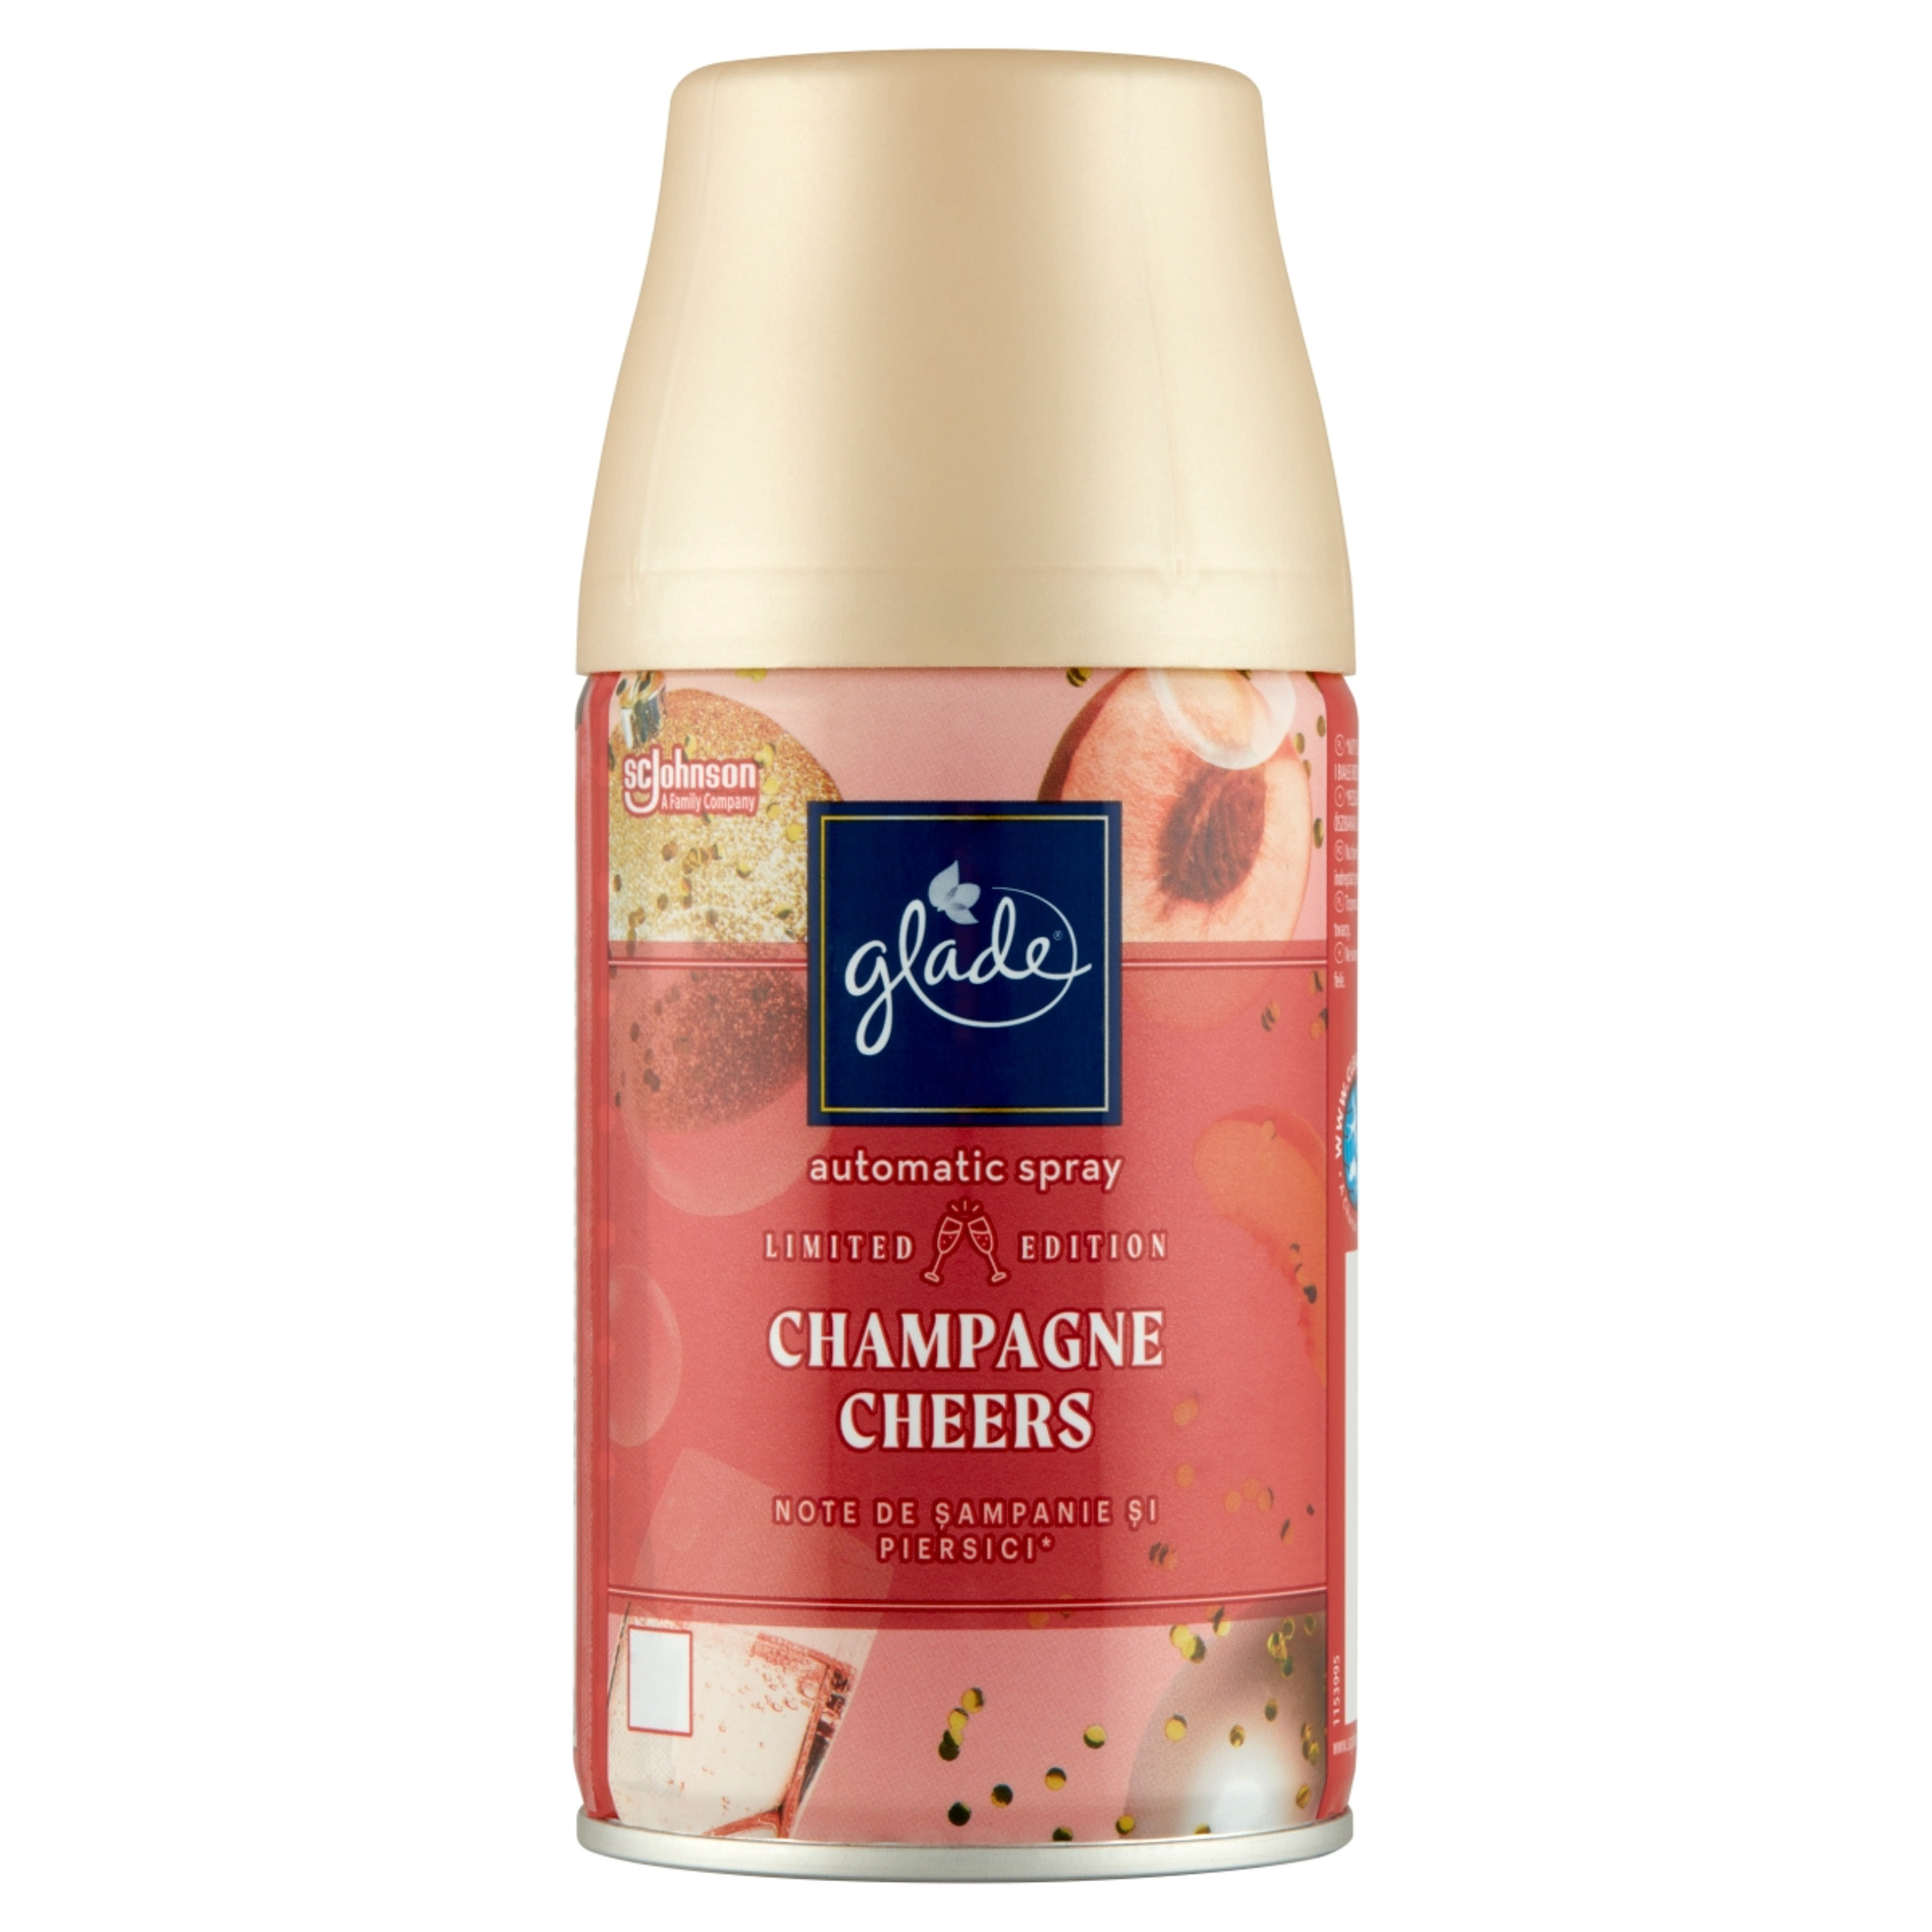 Glade Automatic Spray Champagne Cheers automata légfrissítő utántöltő - 269 ml